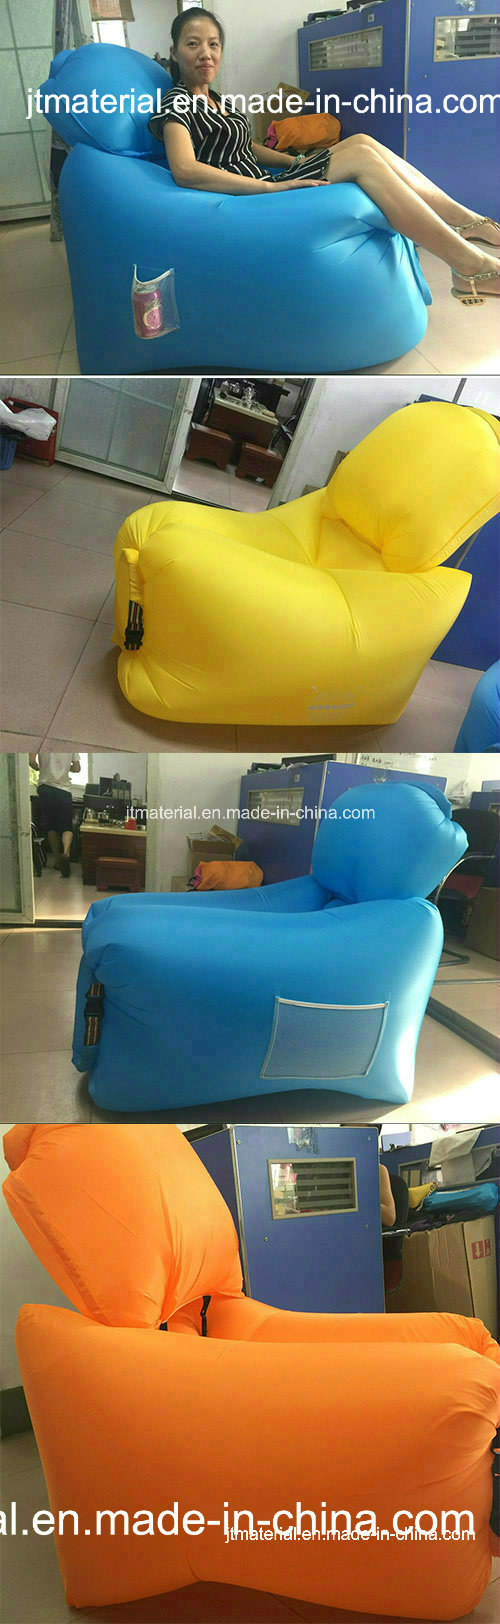 Inflatable Sleeping Air Bag Bed Air Chair Bed Designs Lamzac Rocca Laybag Air Inflatable Lounge Air Sofa Chair